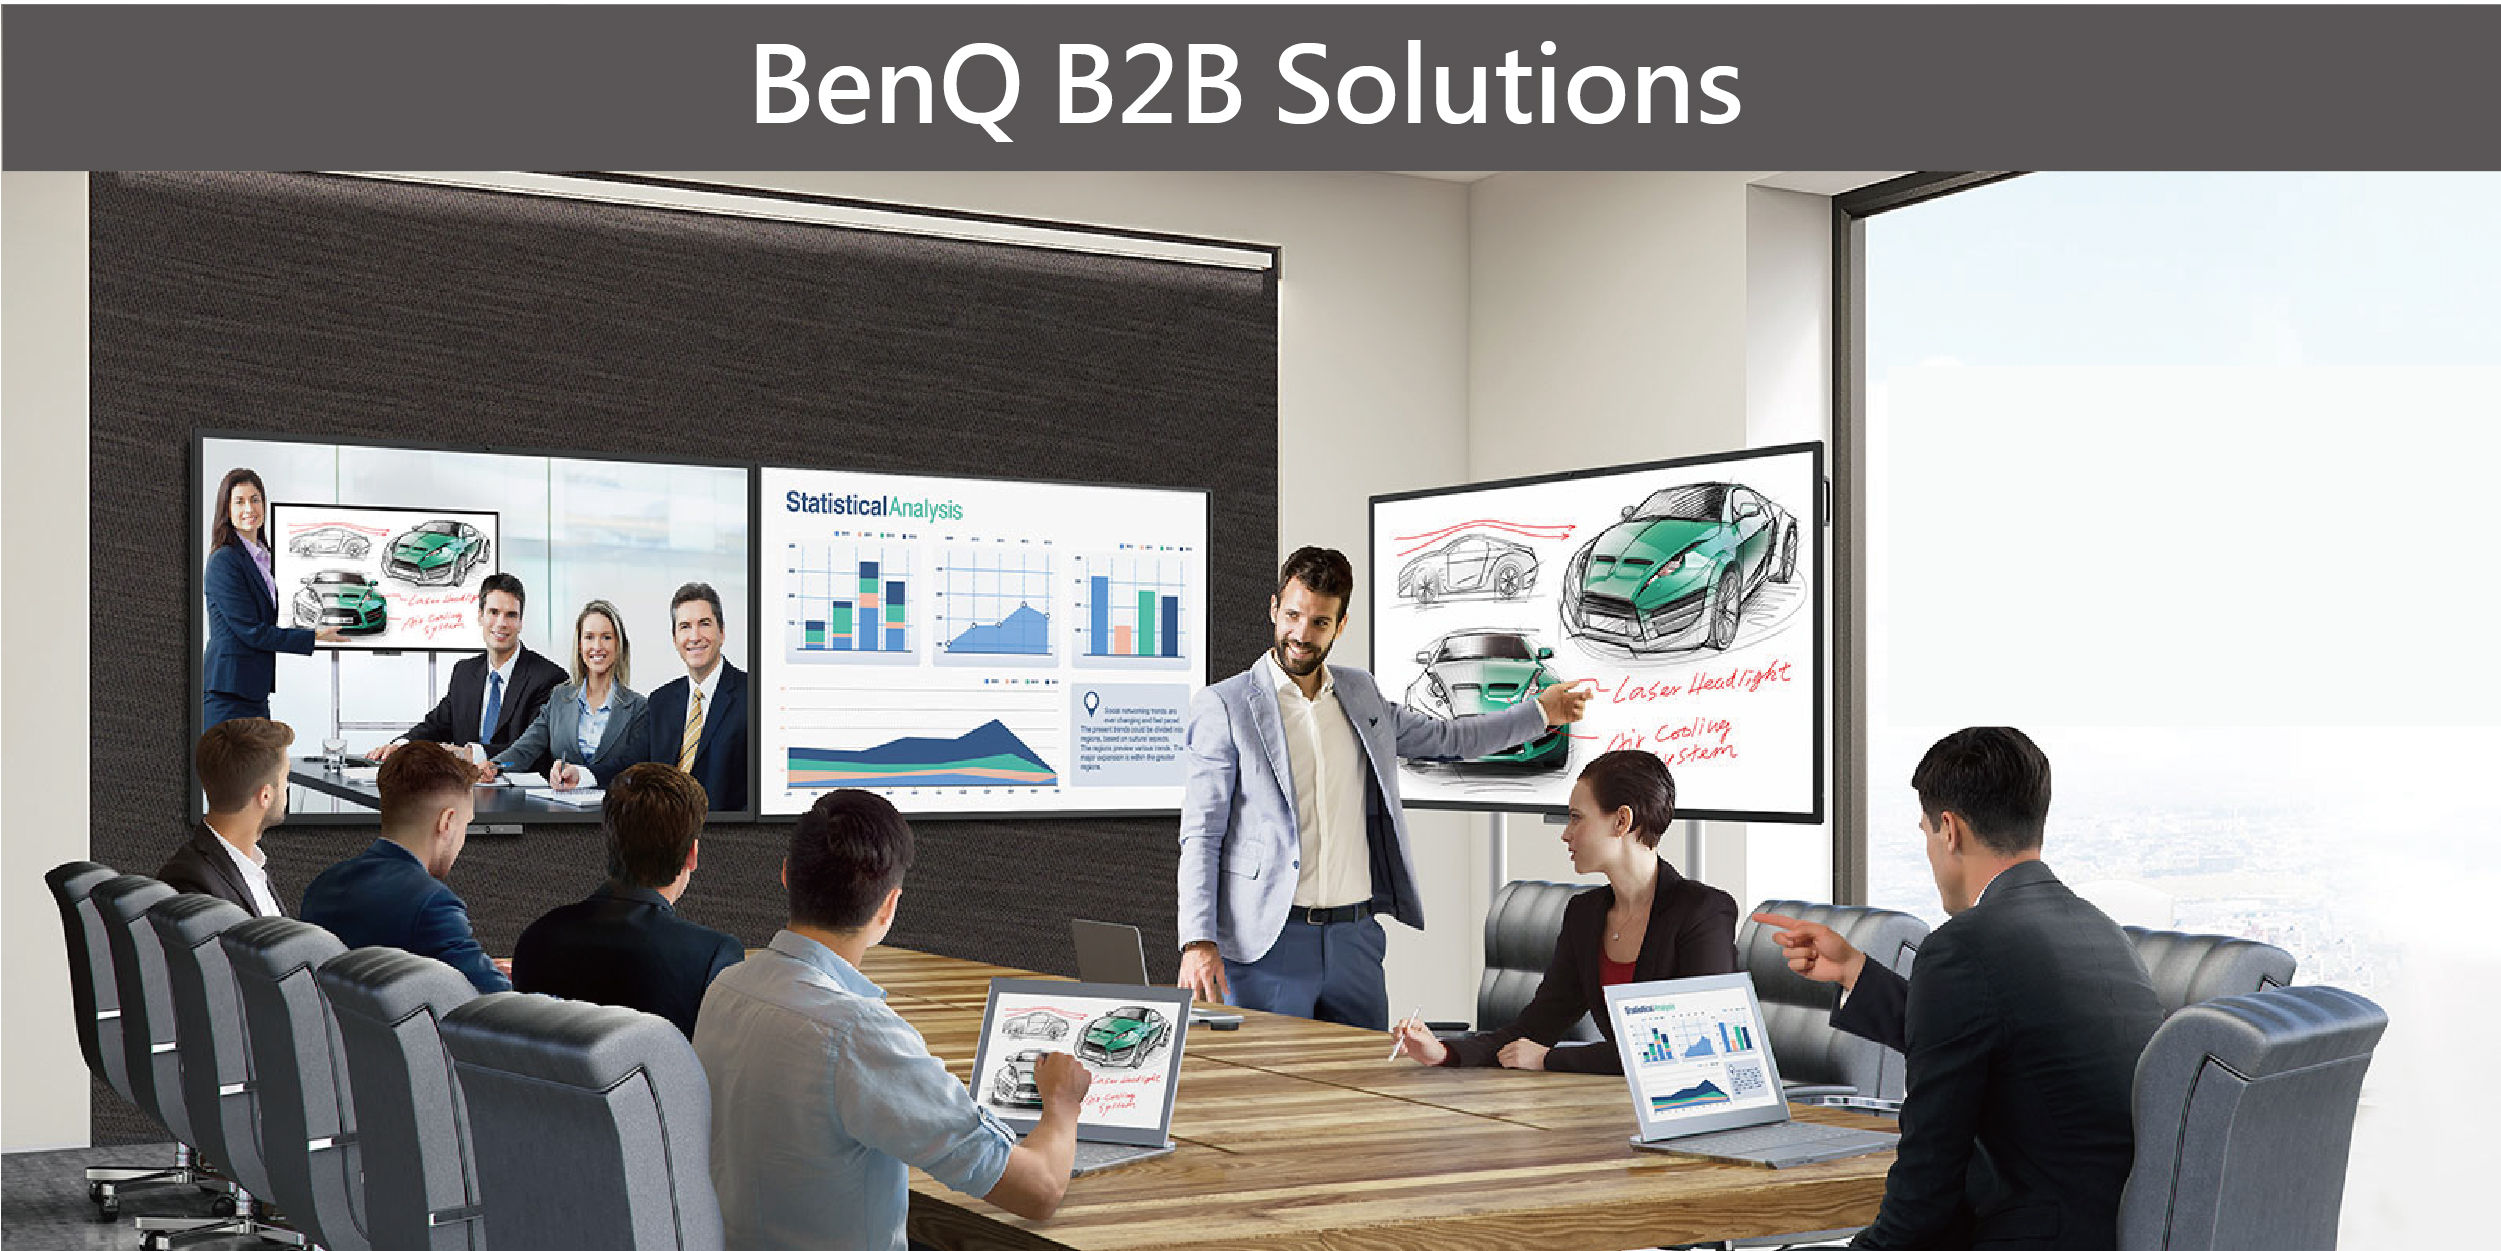 BenQ B2B Solutions